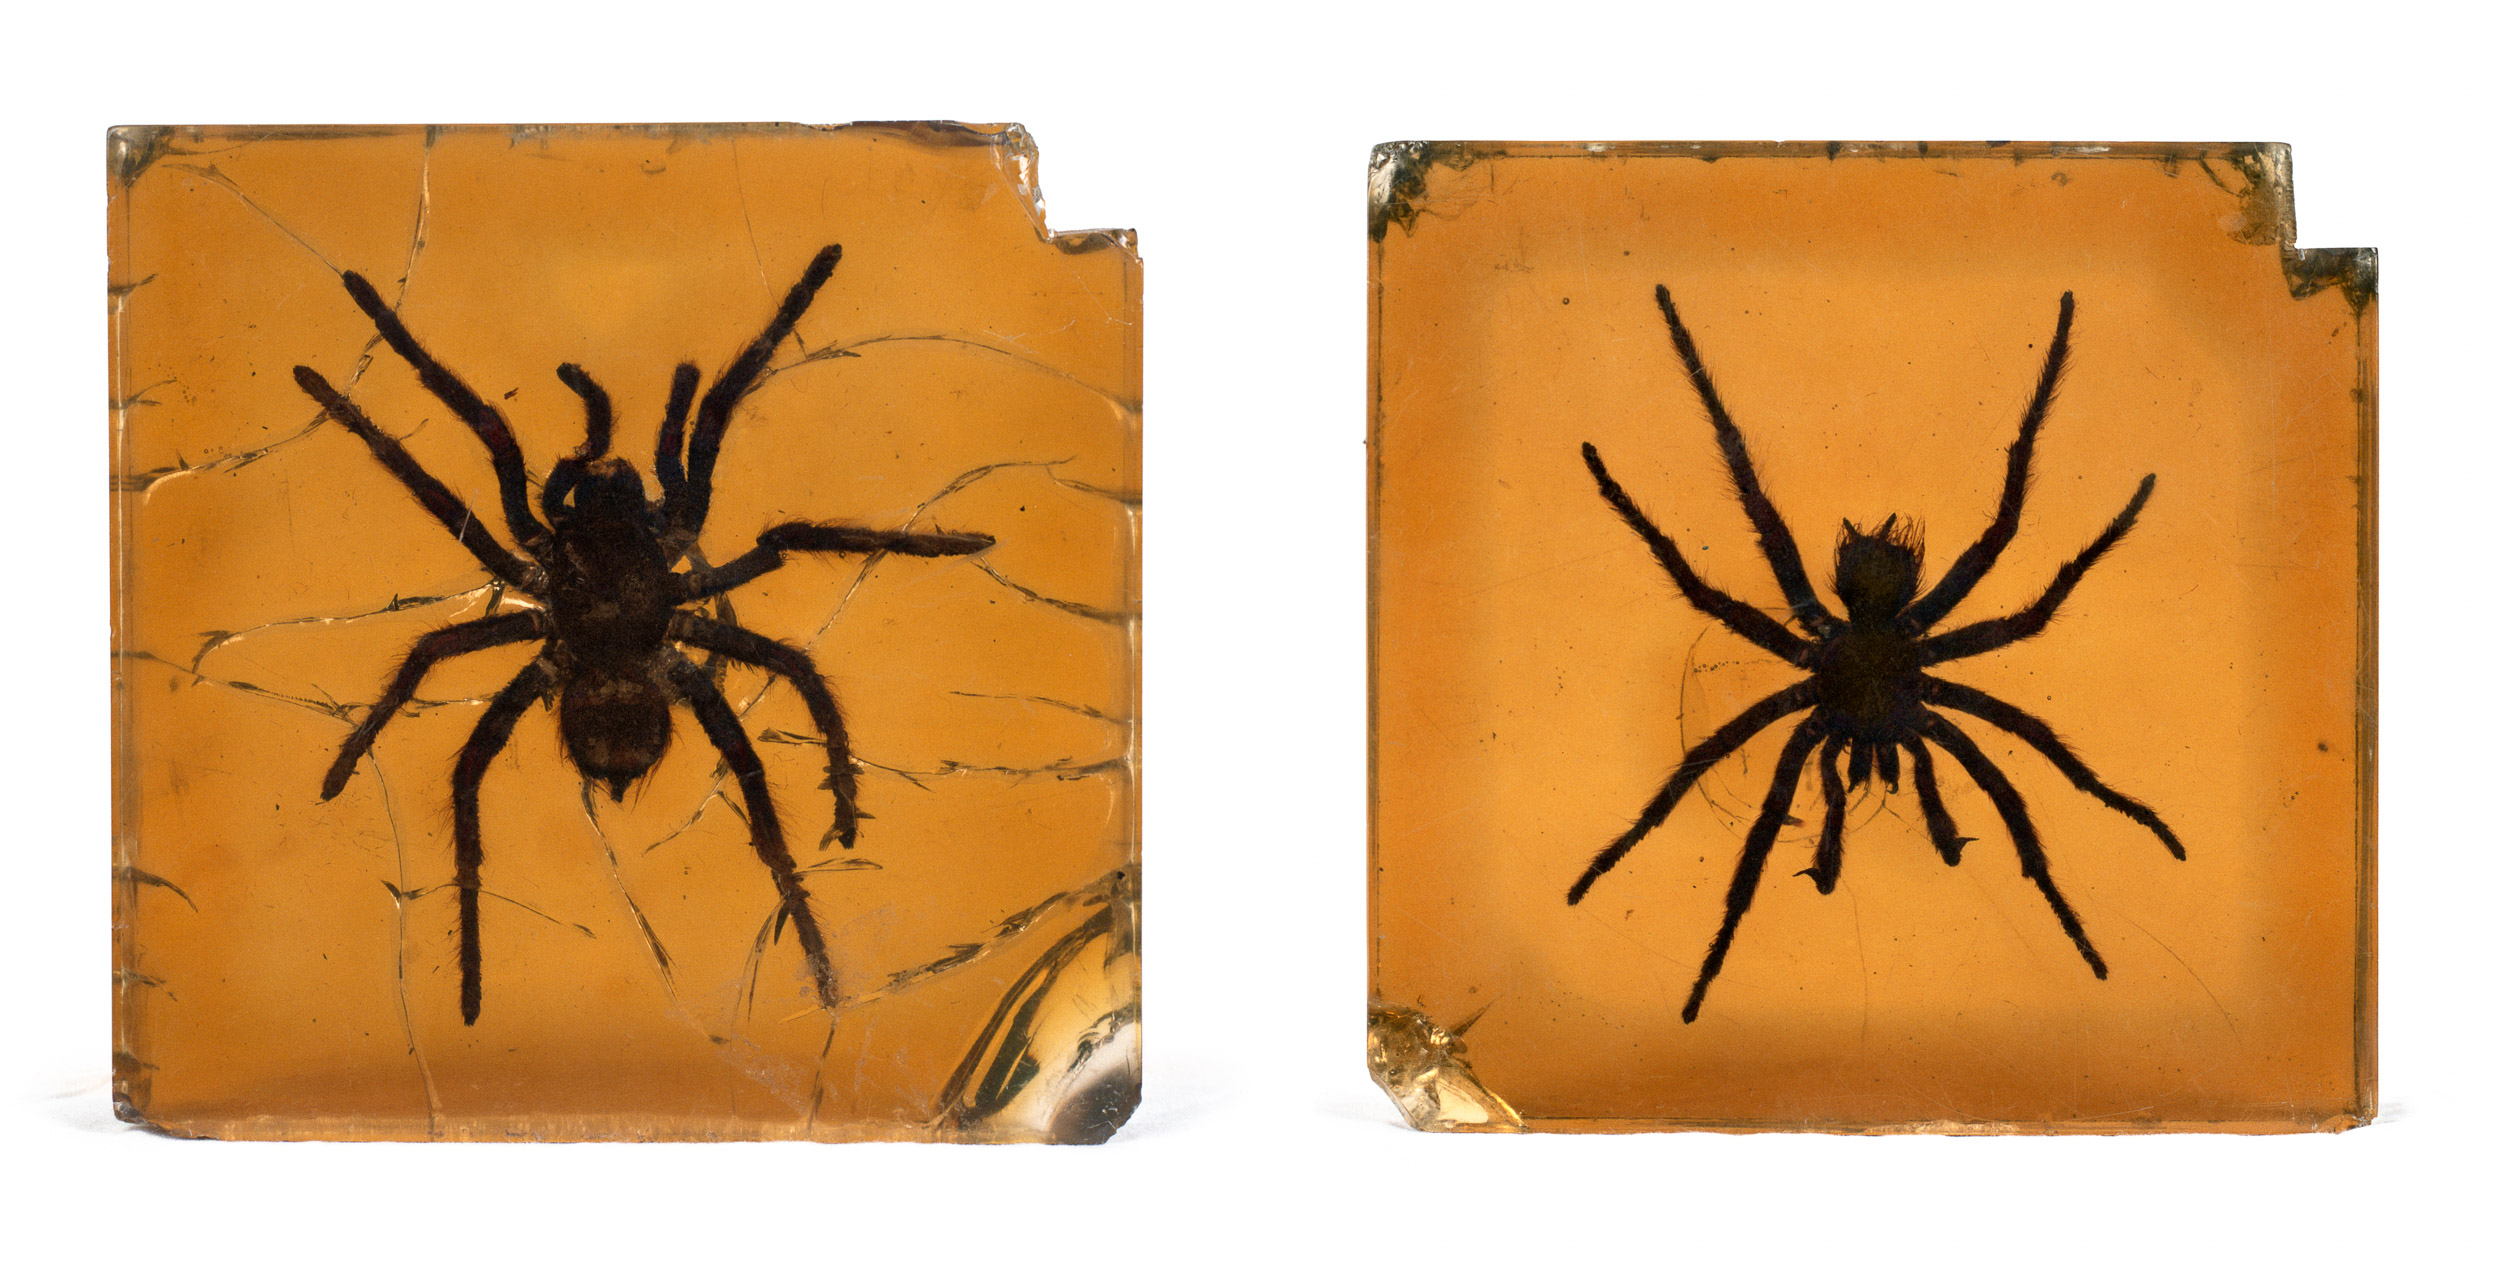 Arachnids in crystallized cocaine blocks